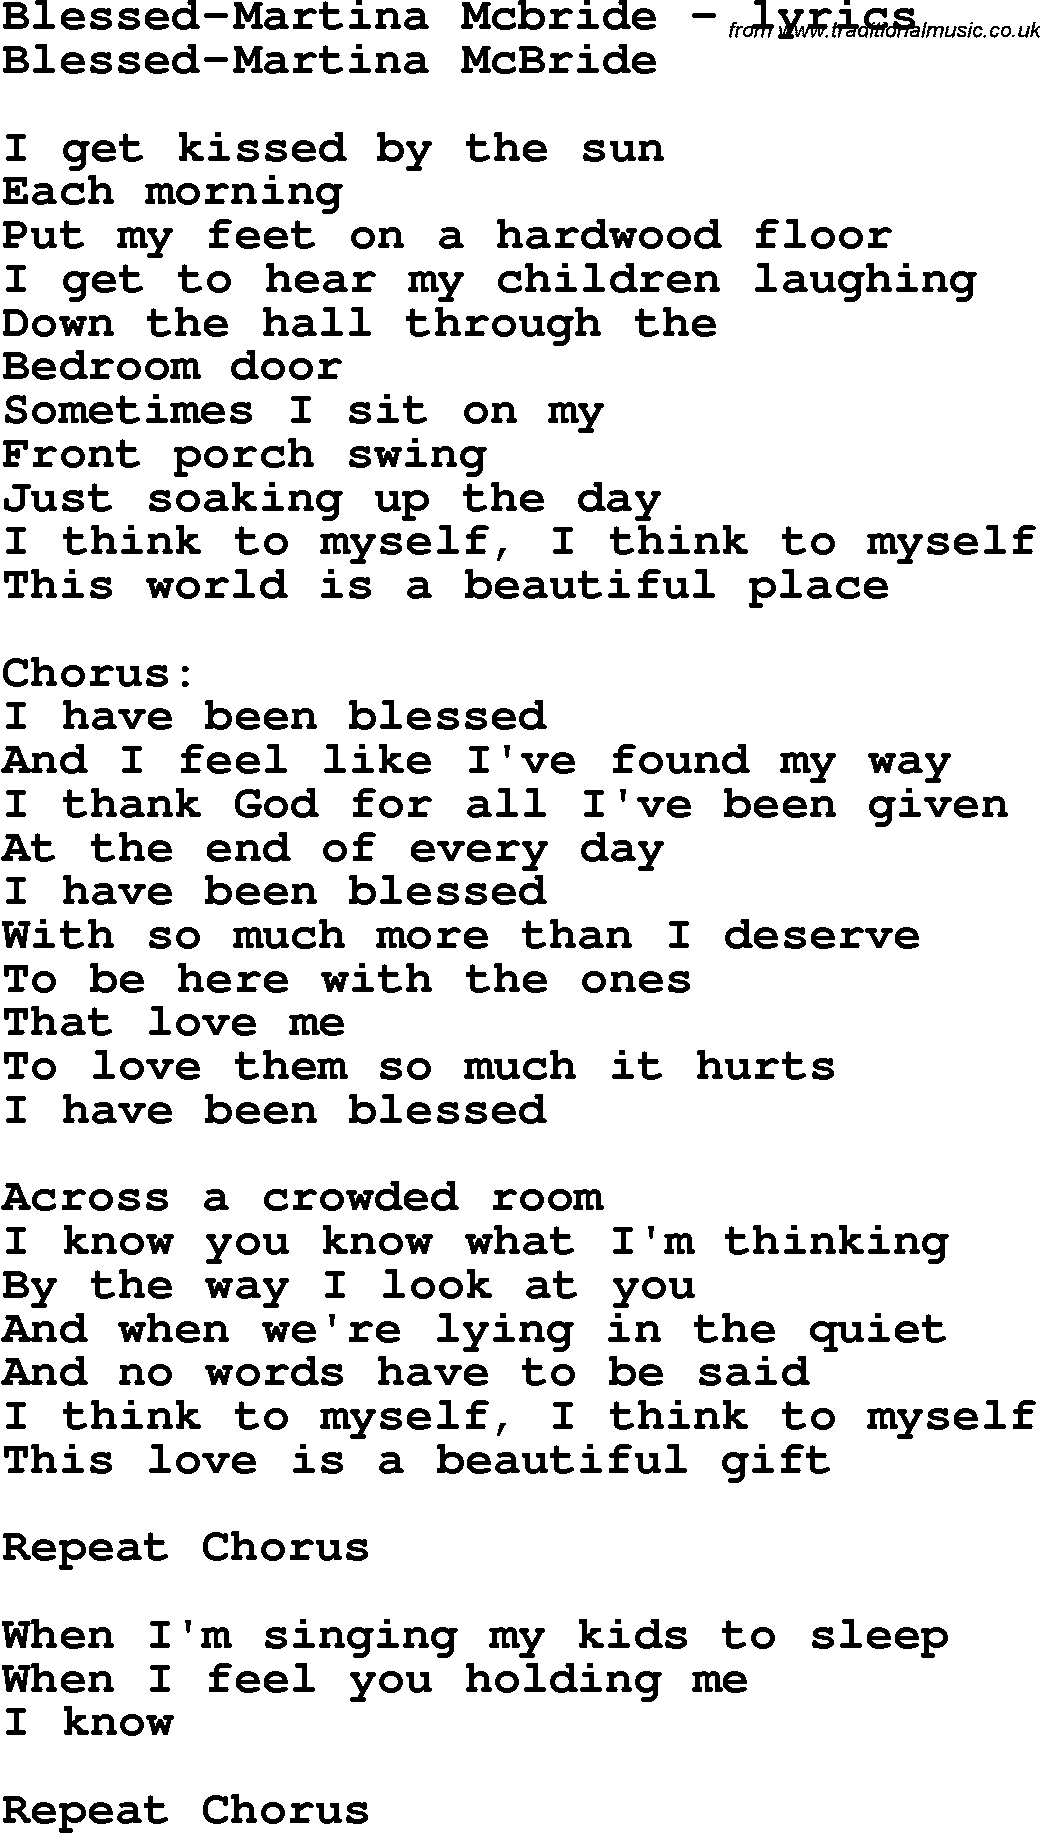 Love Song Lyrics for: Blessed-Martina Mcbride